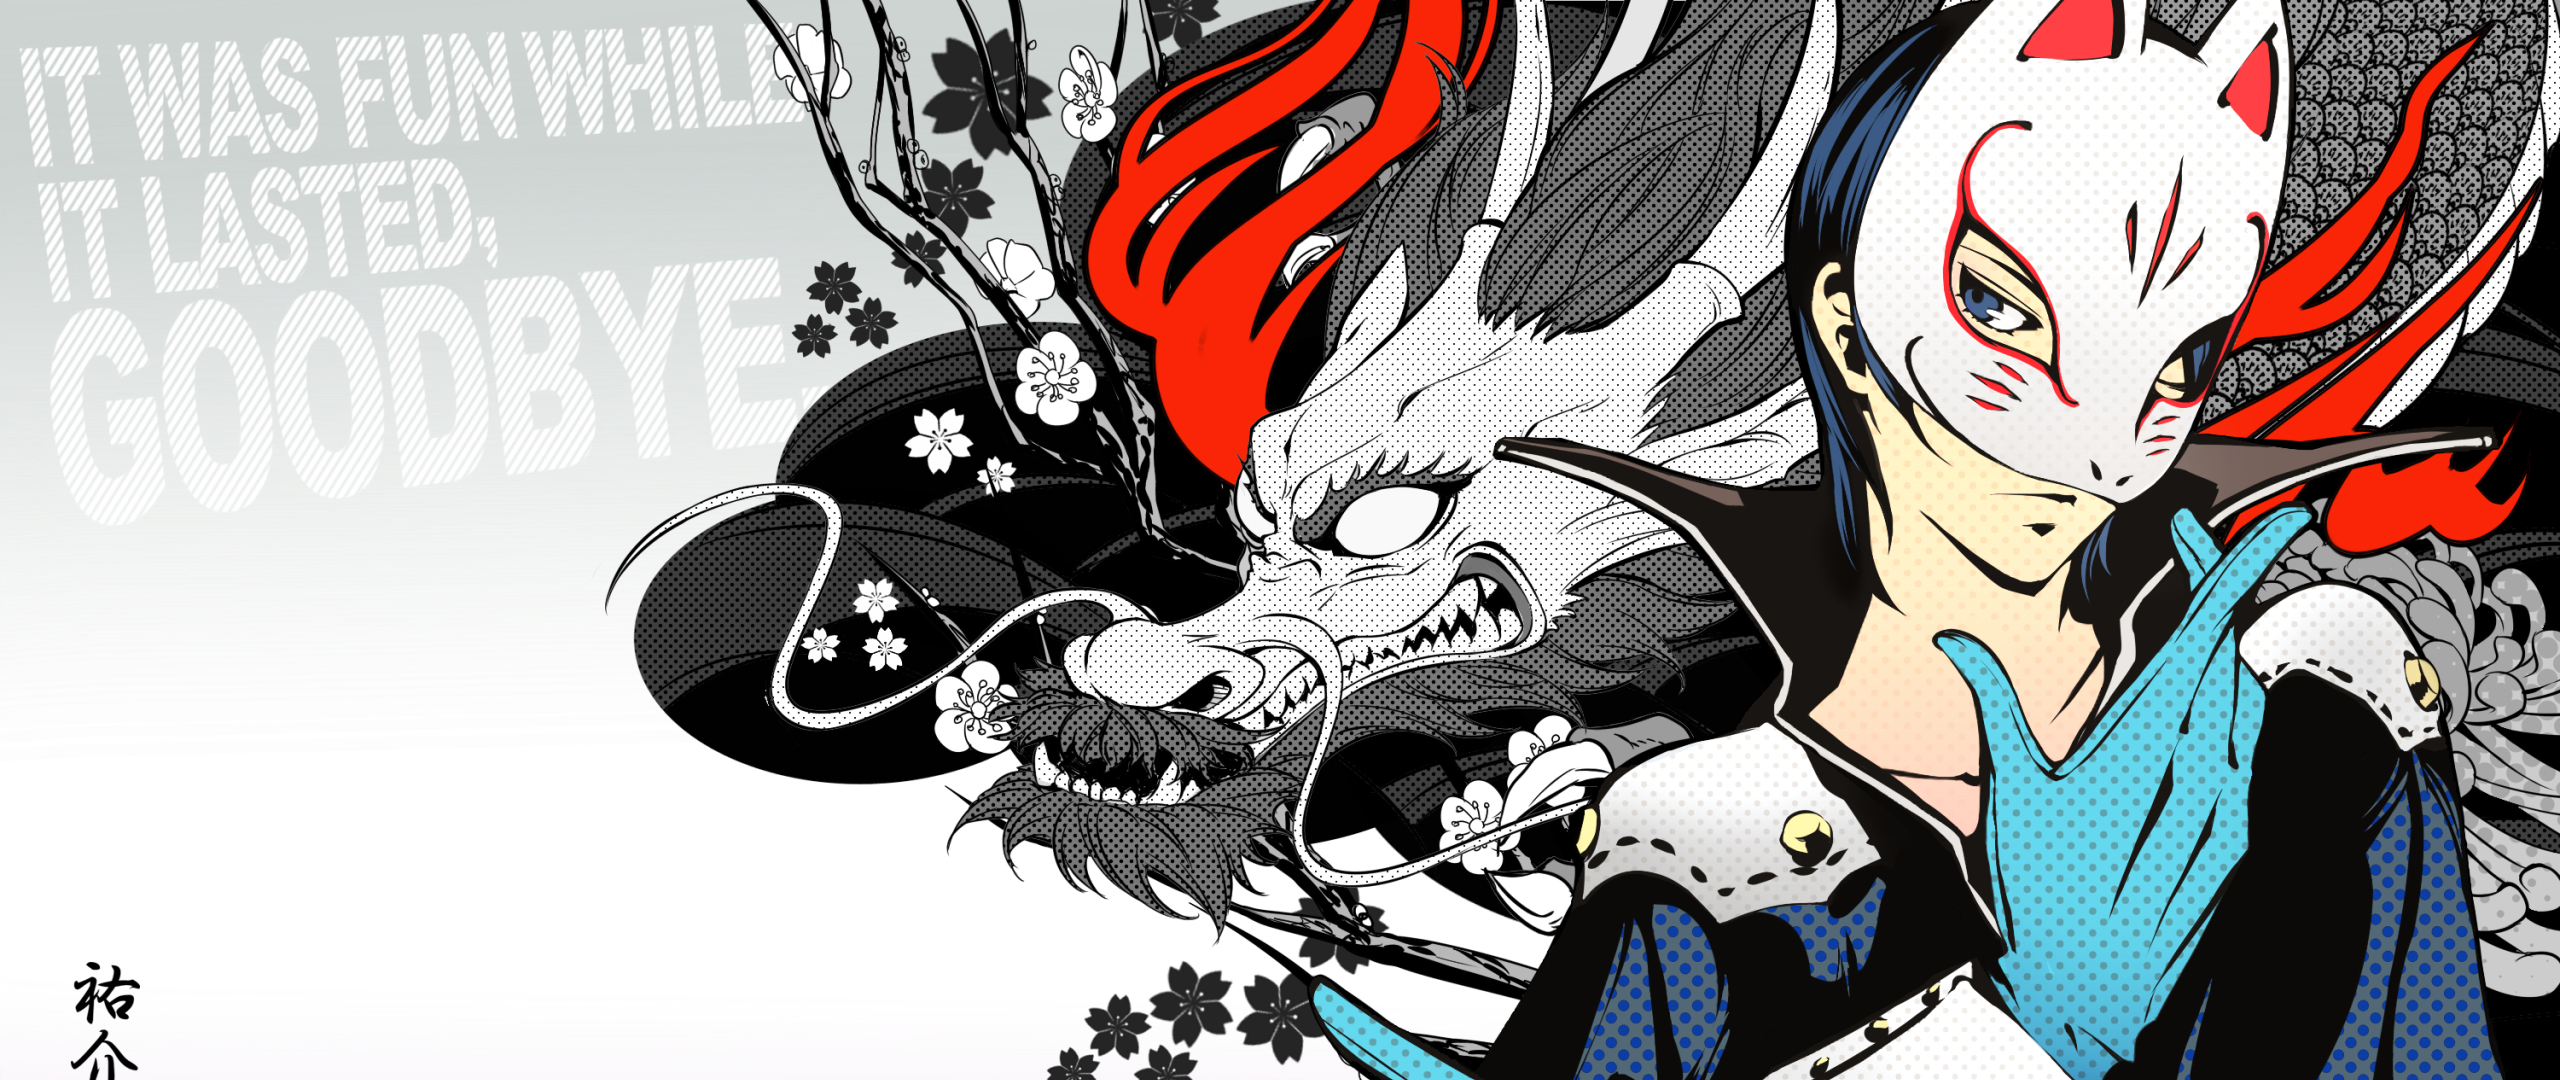 Persona 5 Yusuke Kitagawa Nail Art - wide 9